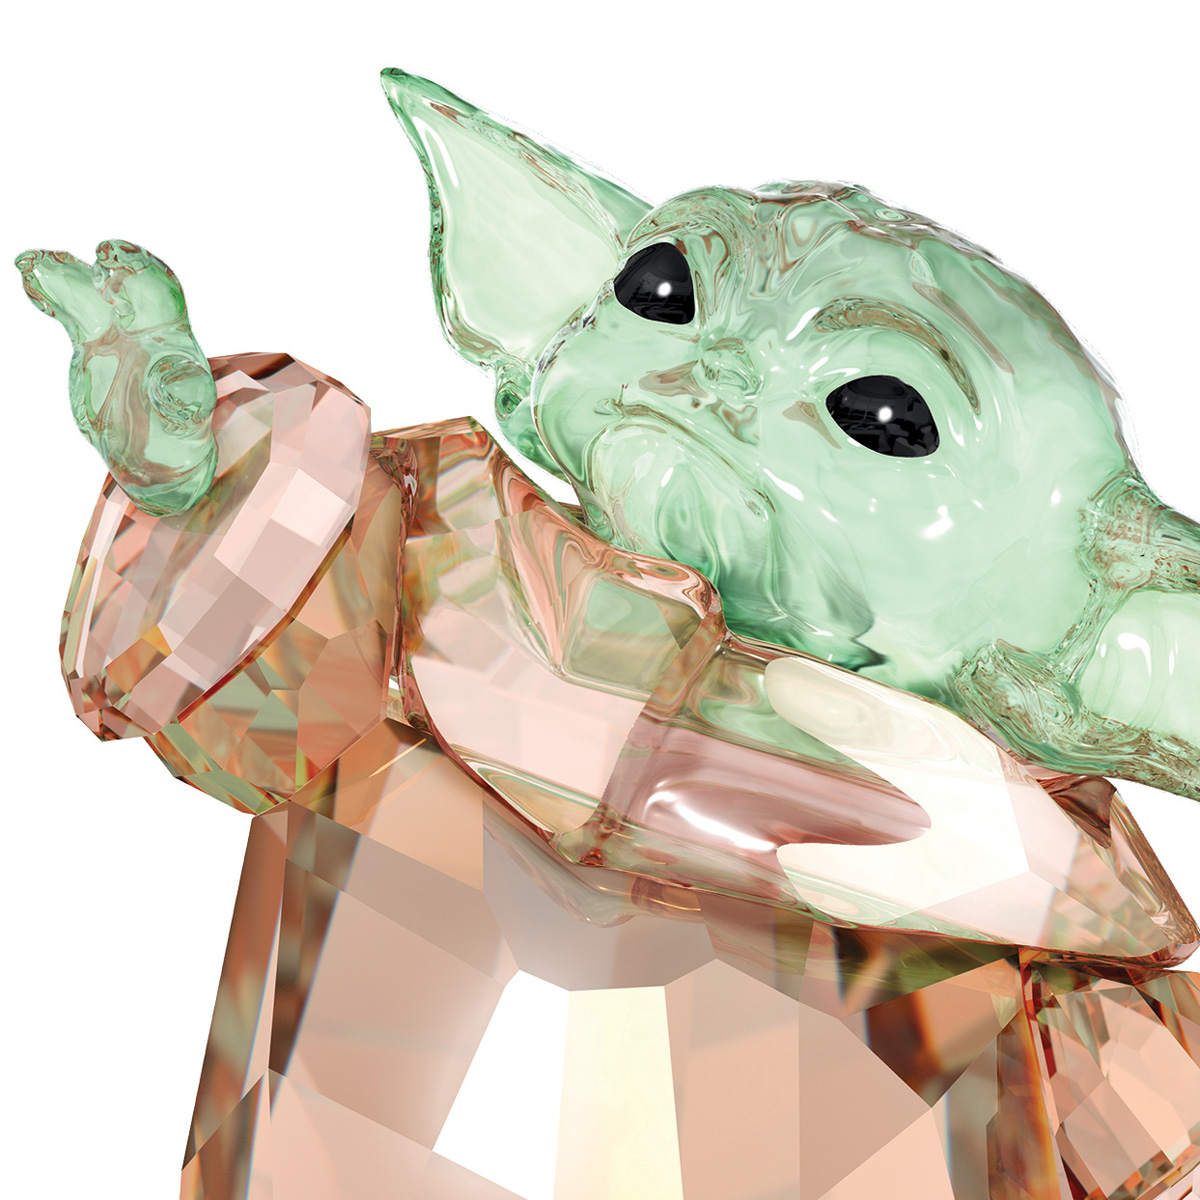 Swarovski Star Wars Chewbacca Crystal Figurine